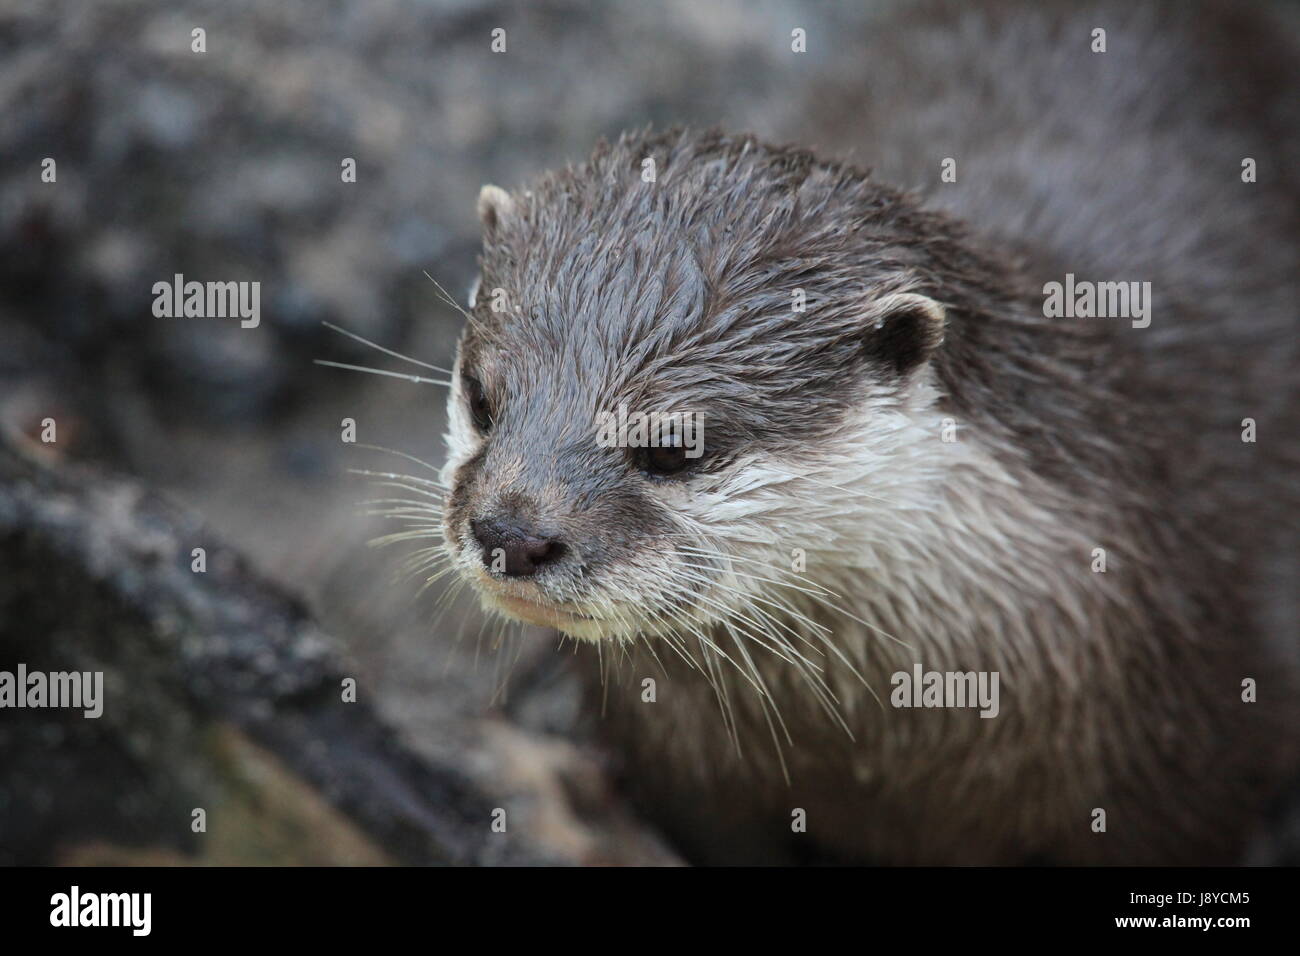 fish, otter, dwarf, macro, close-up, macro admission, close up view, animal, Stock Photo